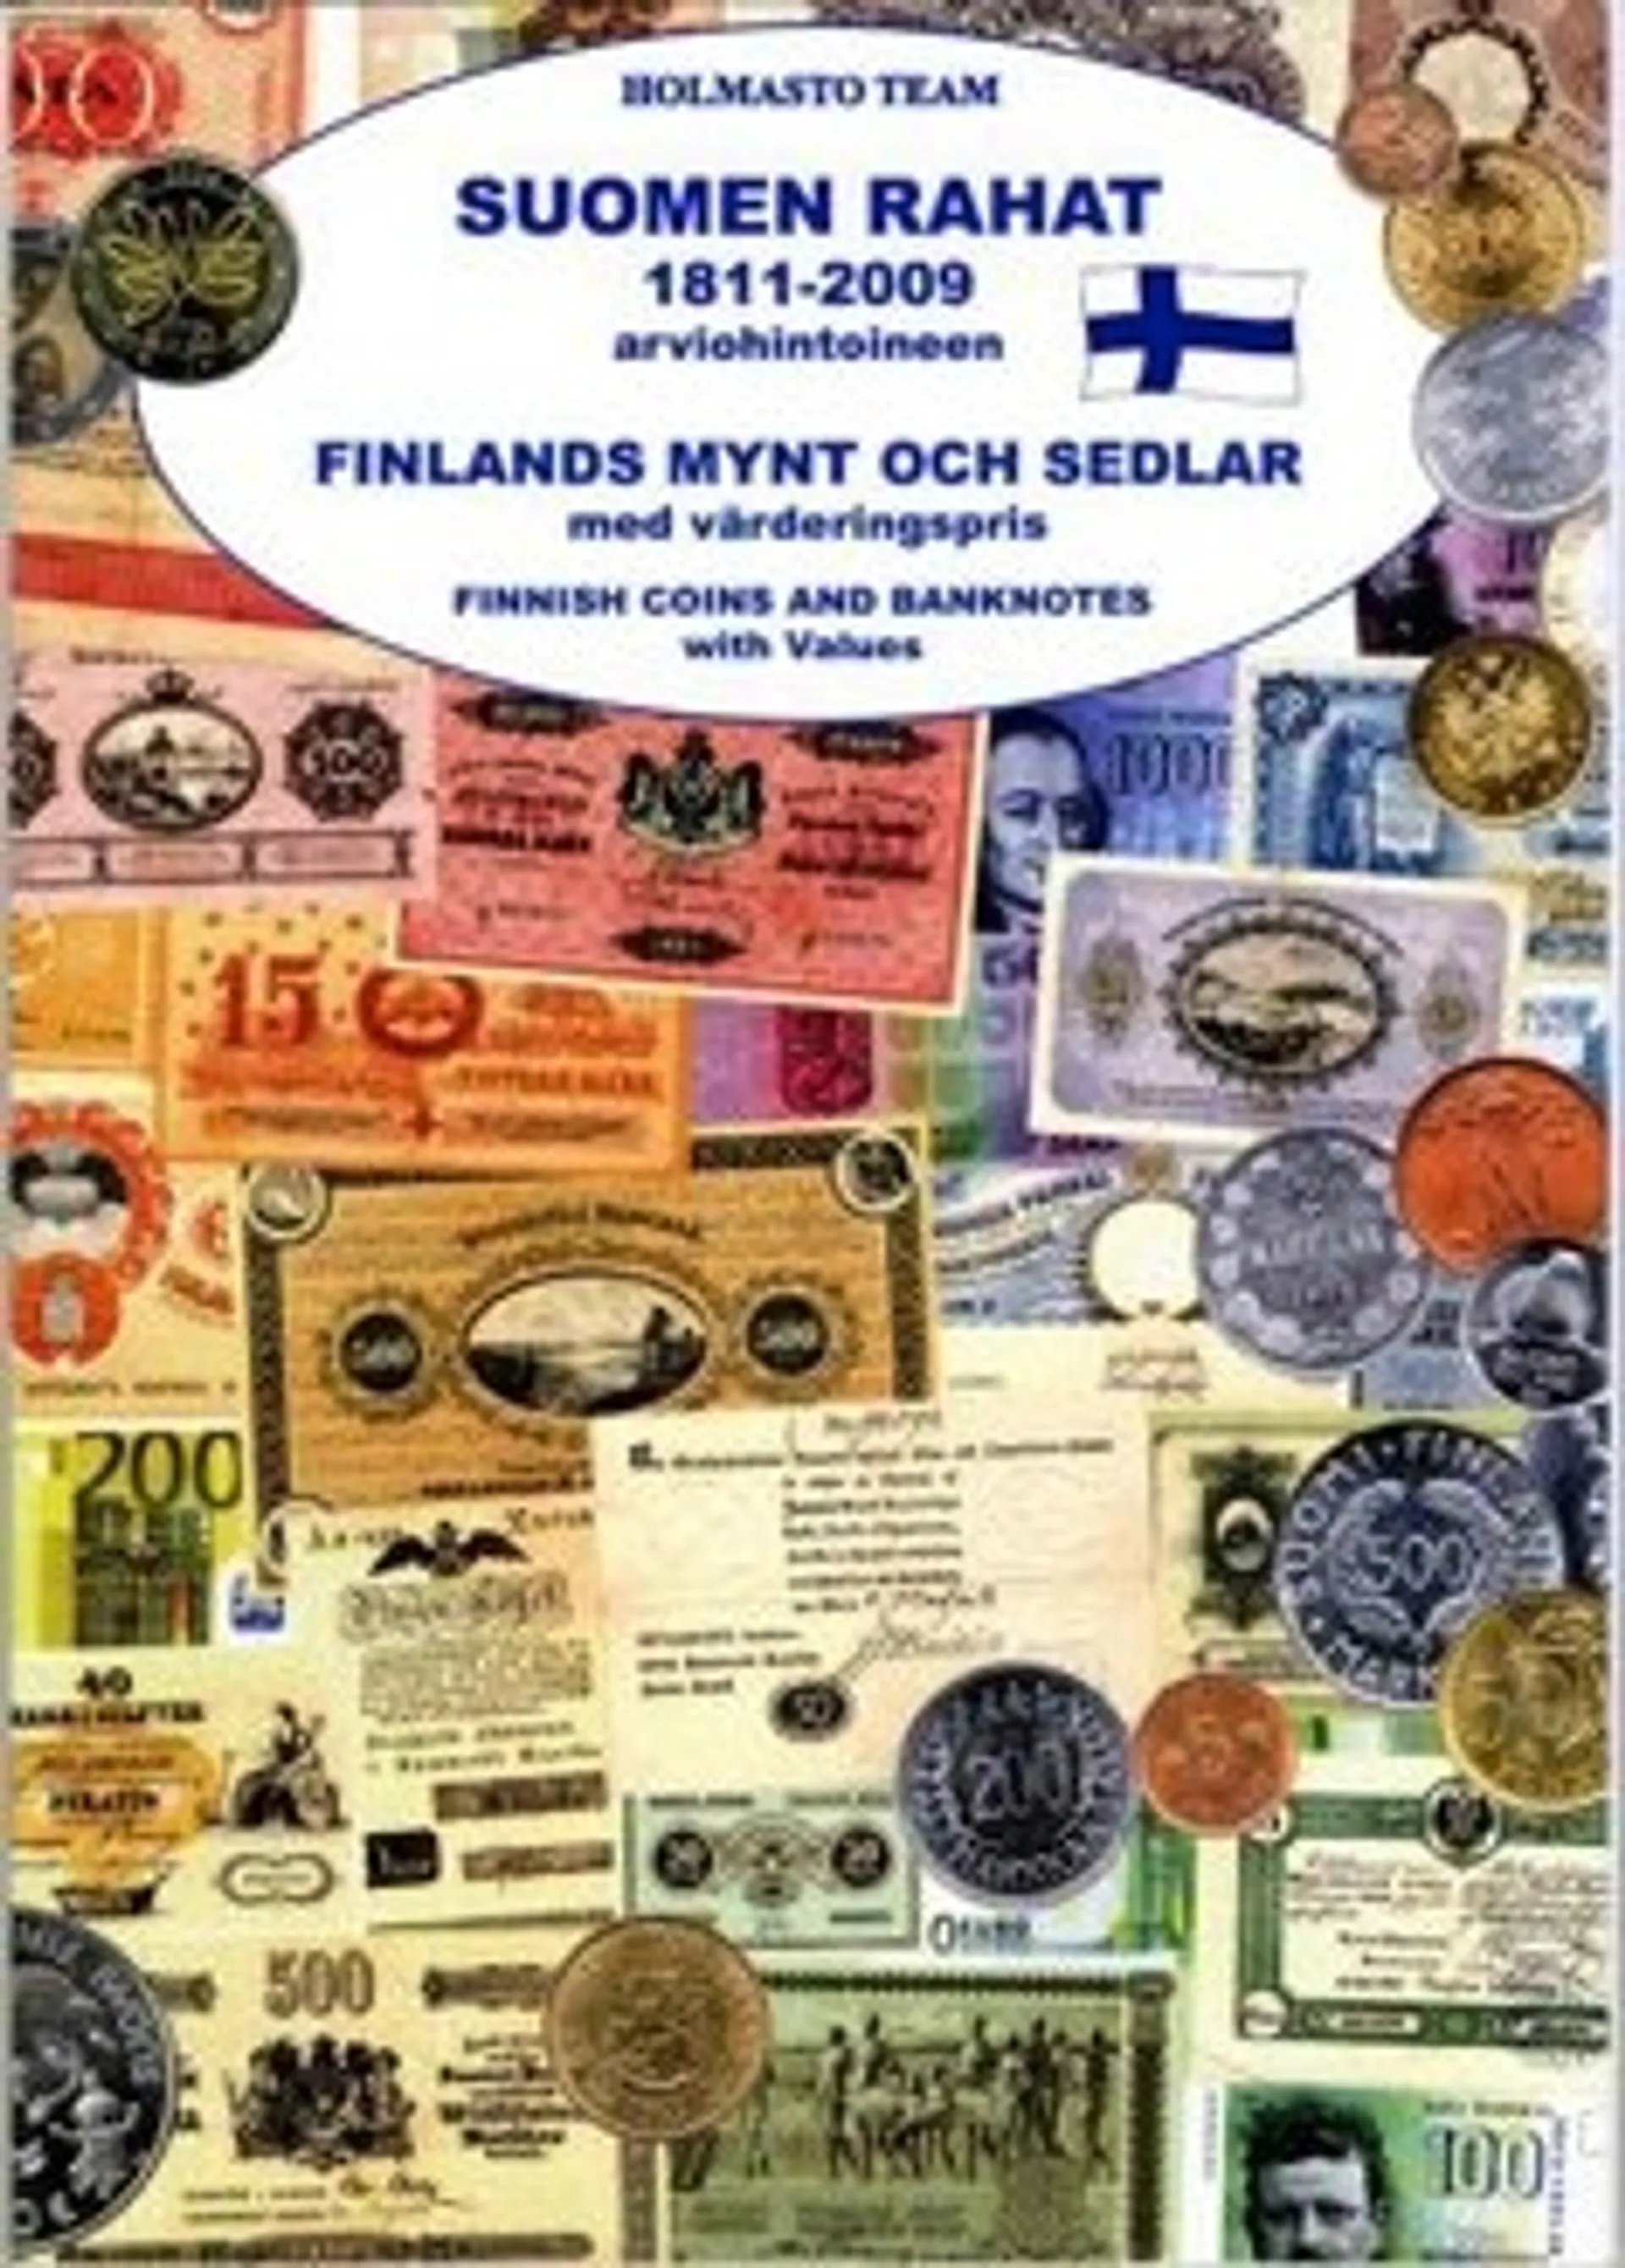 Suomen rahat 1811-2009 arviohintoineen